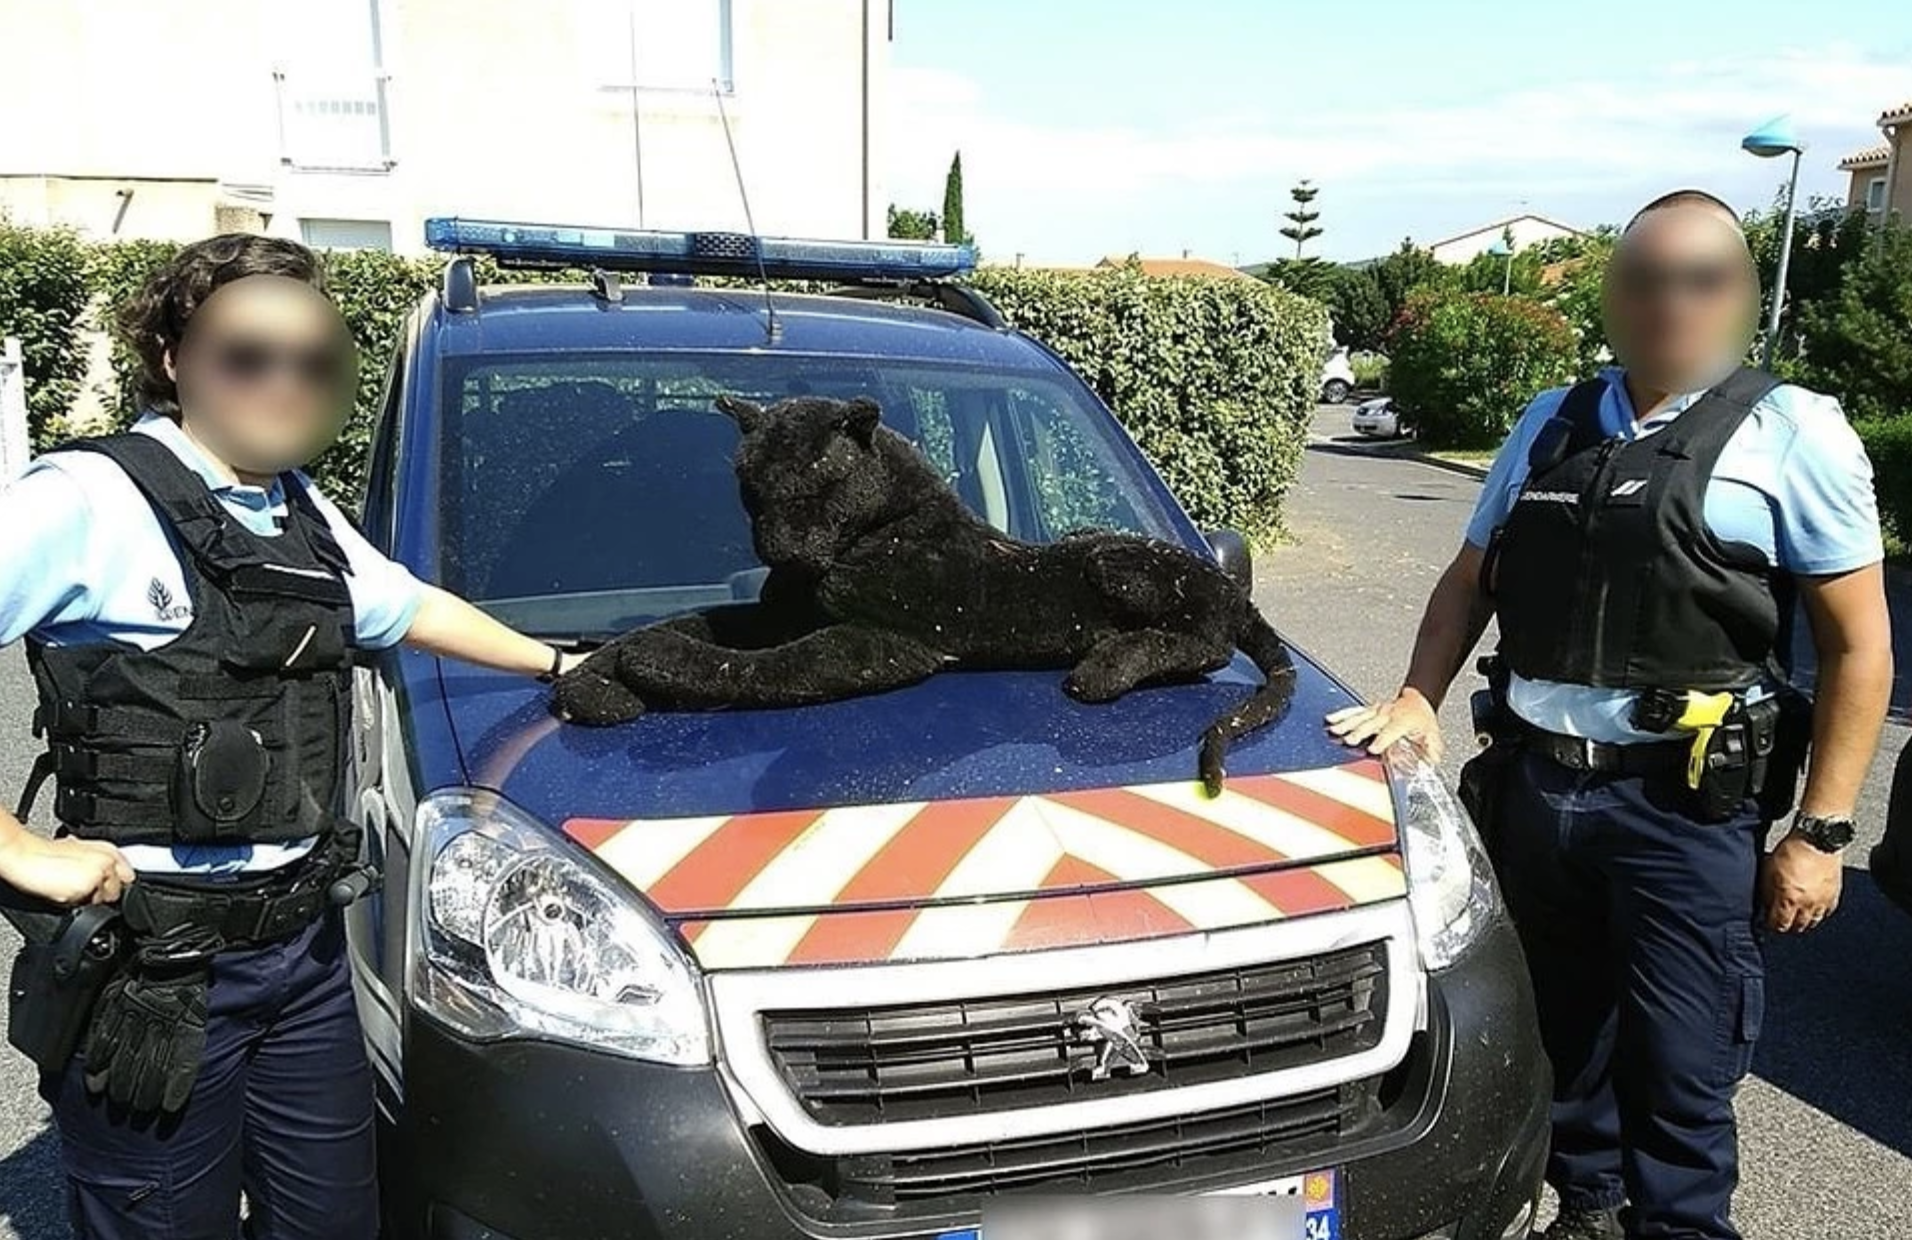 Французские жандармы «арестовали» плюшевую пантеру